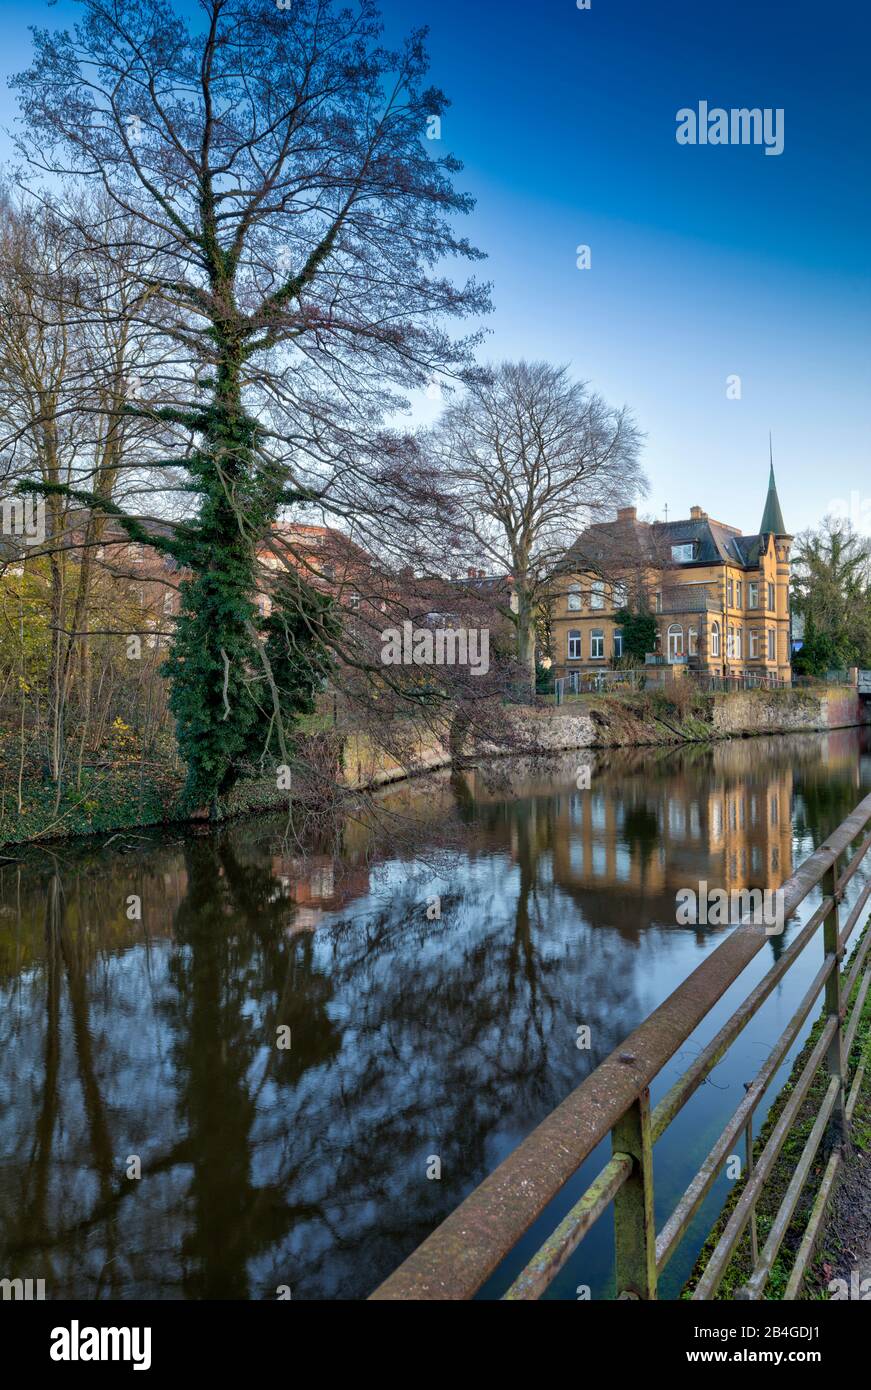 City villa by the river, Ilmenau, Hanseatic city, autumn, winter, Lüneburg, Lower Saxony, Germany, Europe Stock Photo